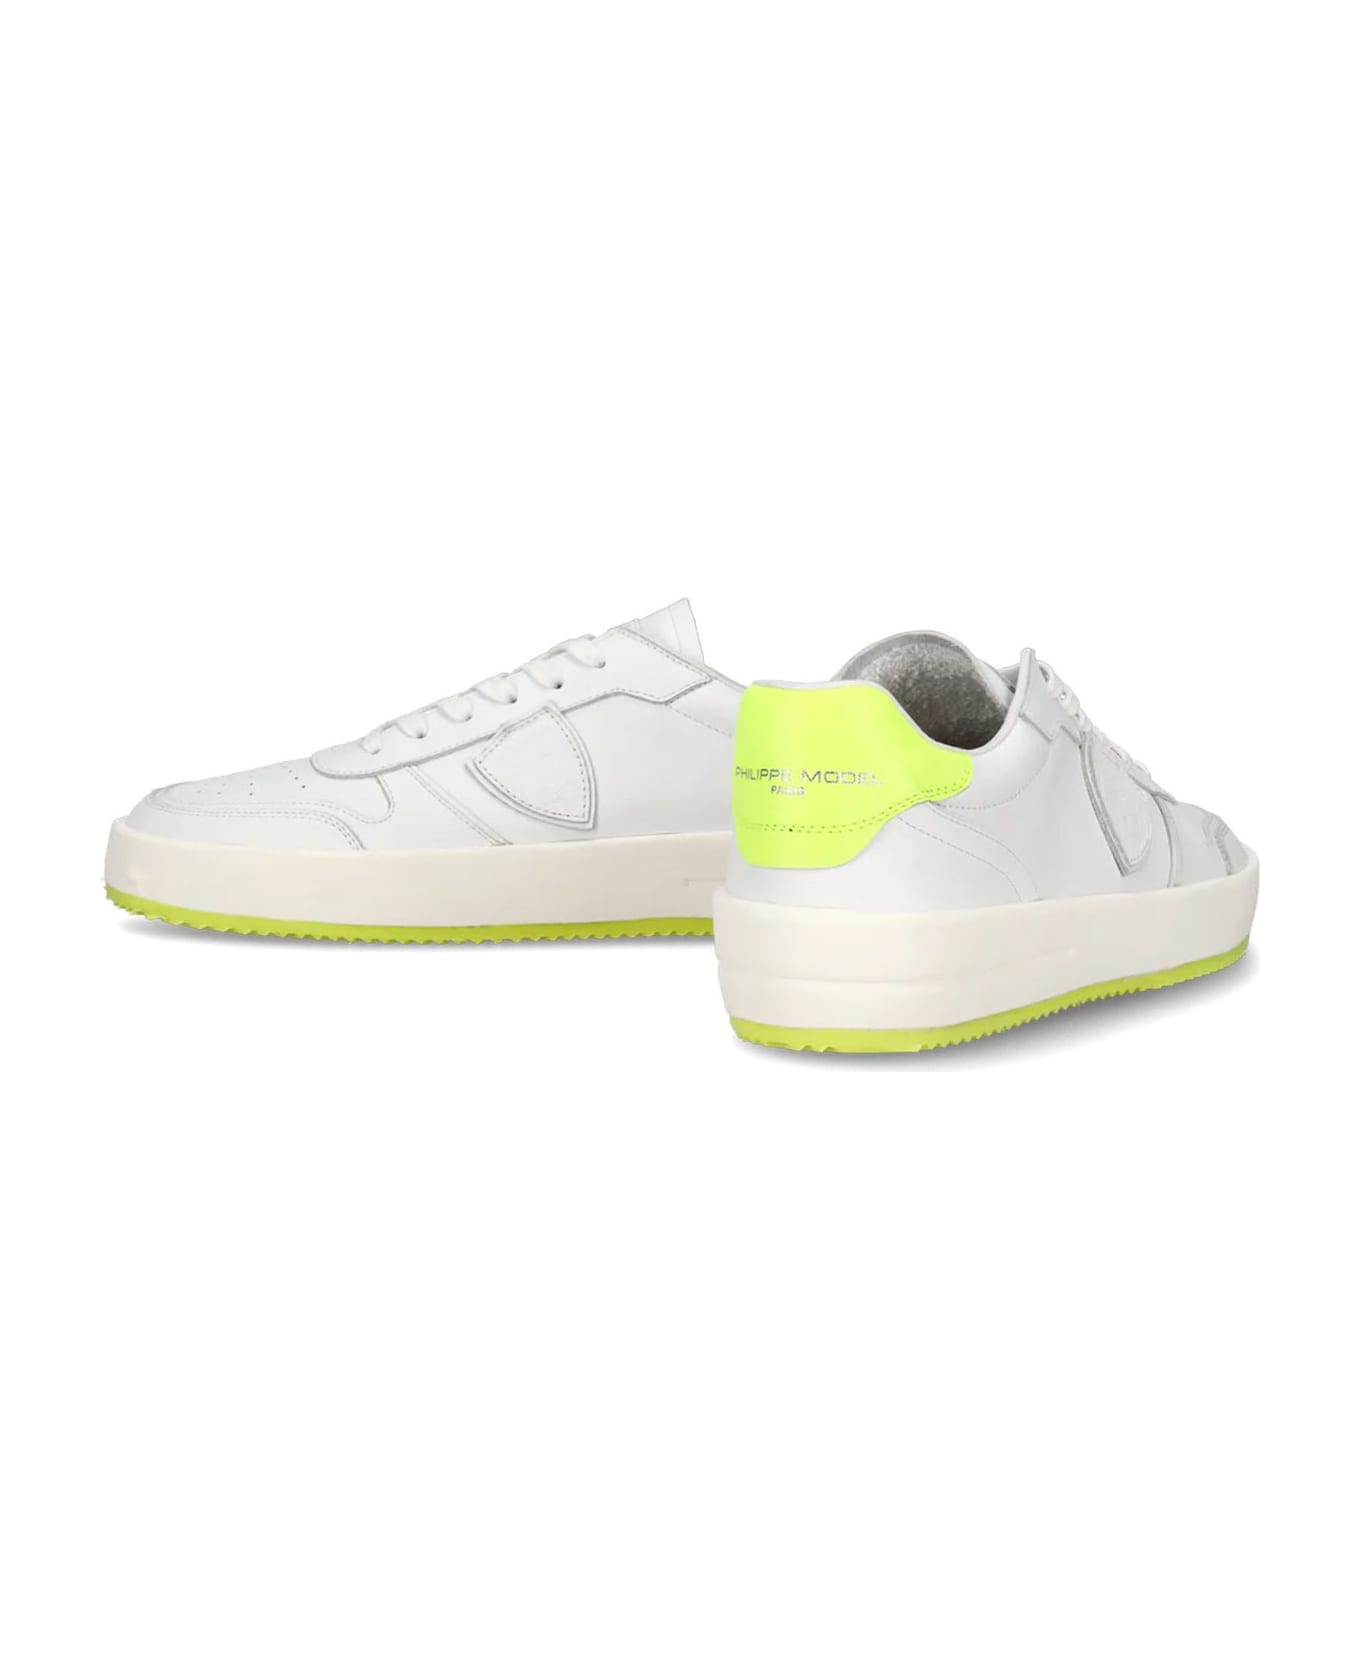 Philippe Model Nice Sneaker White And Neon Yellow - White